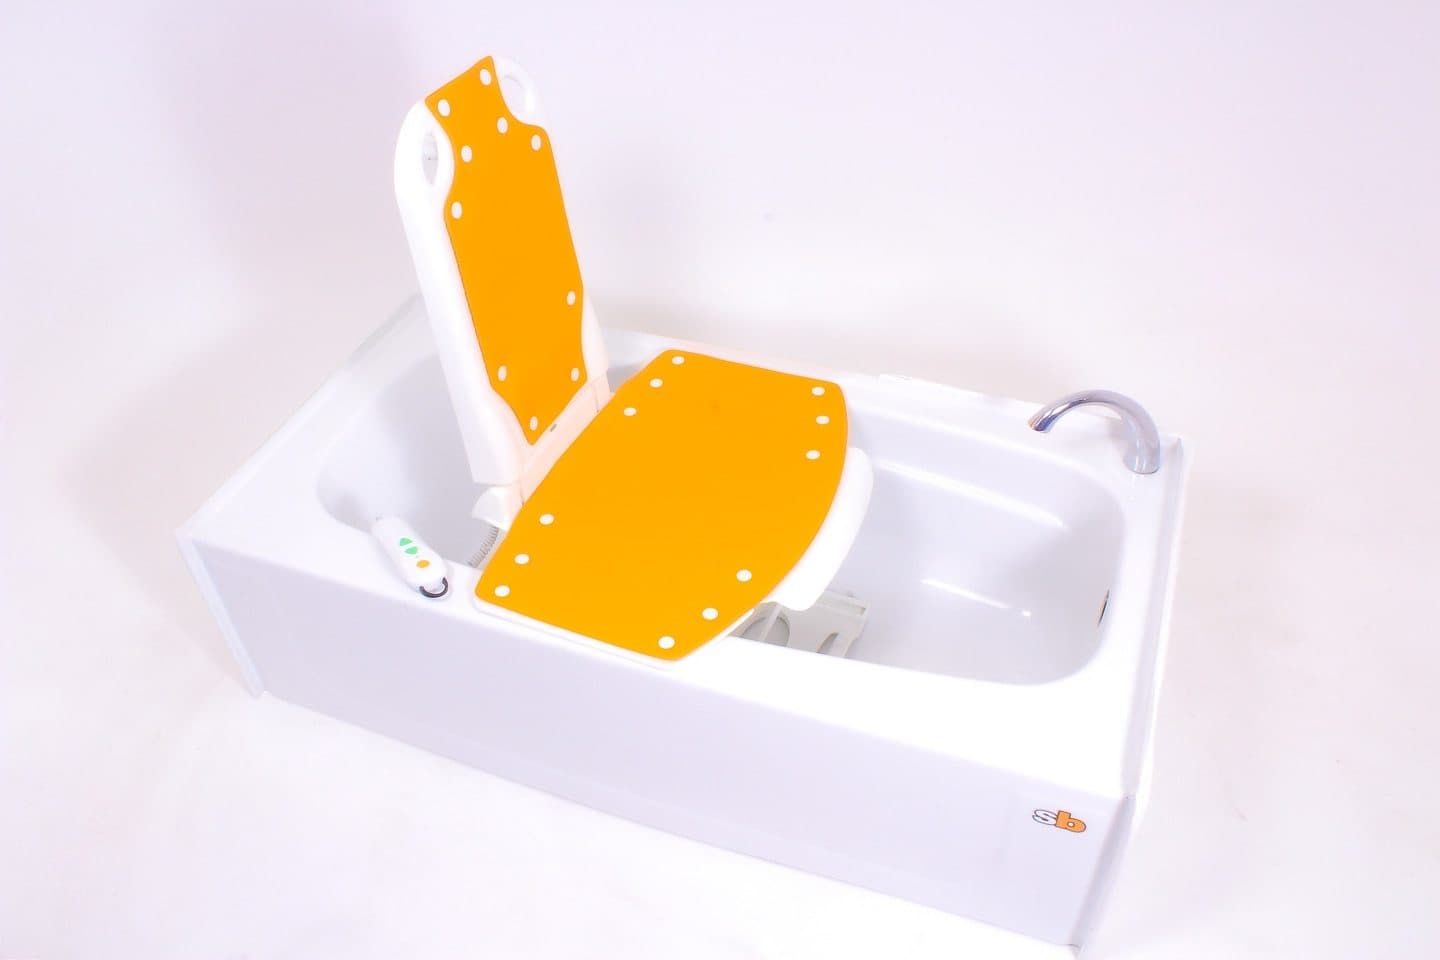 Bath Lift Chair, Electric controls, Reclining Backrest, BathLyft